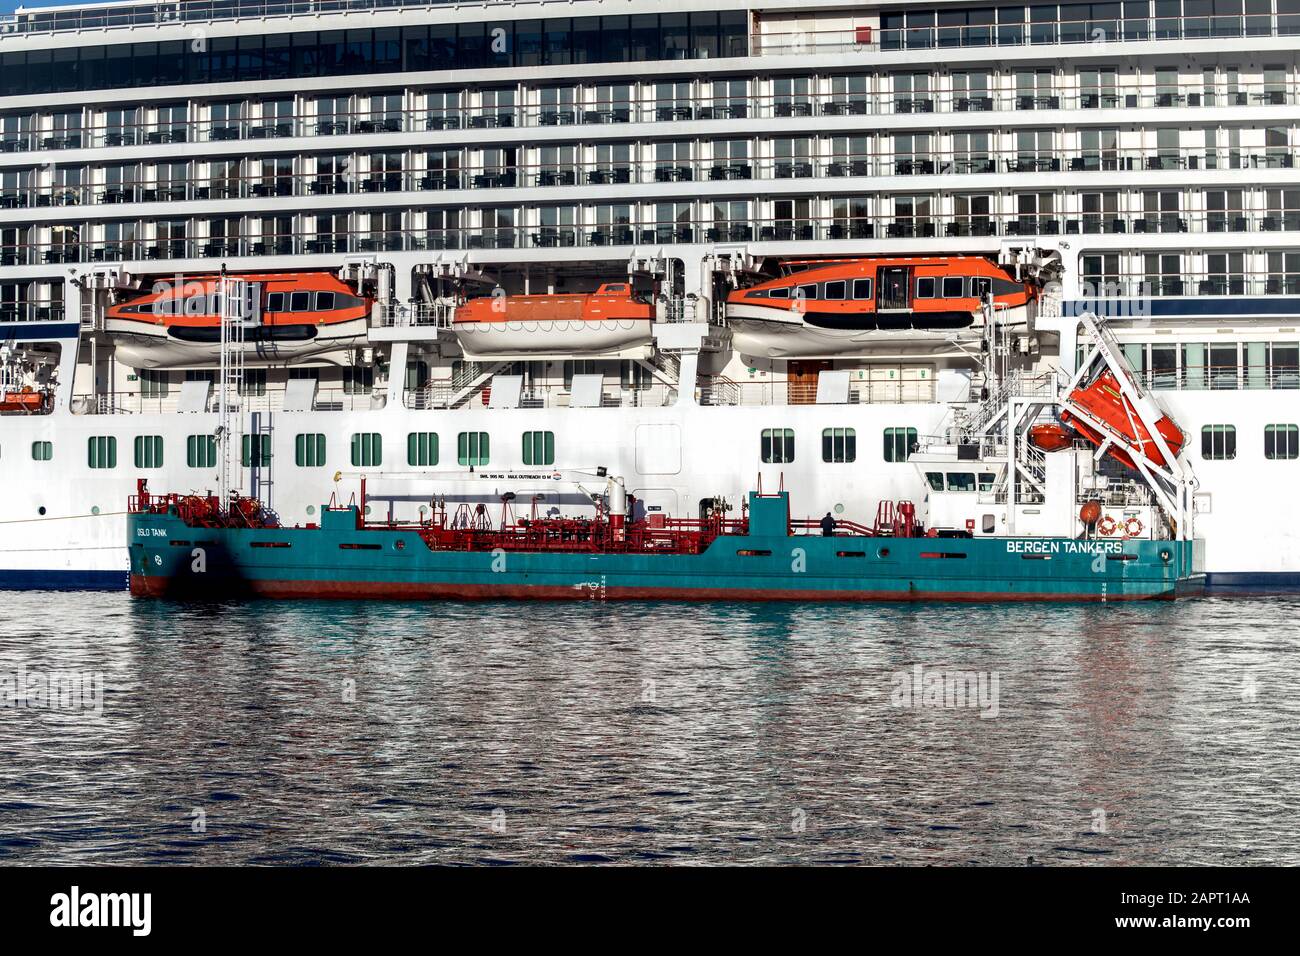 Tanker vessel Oslo Tank alongside the large cruise ship Viking Star at Skolten quay in port of Bergen, Norway. Stock Photo